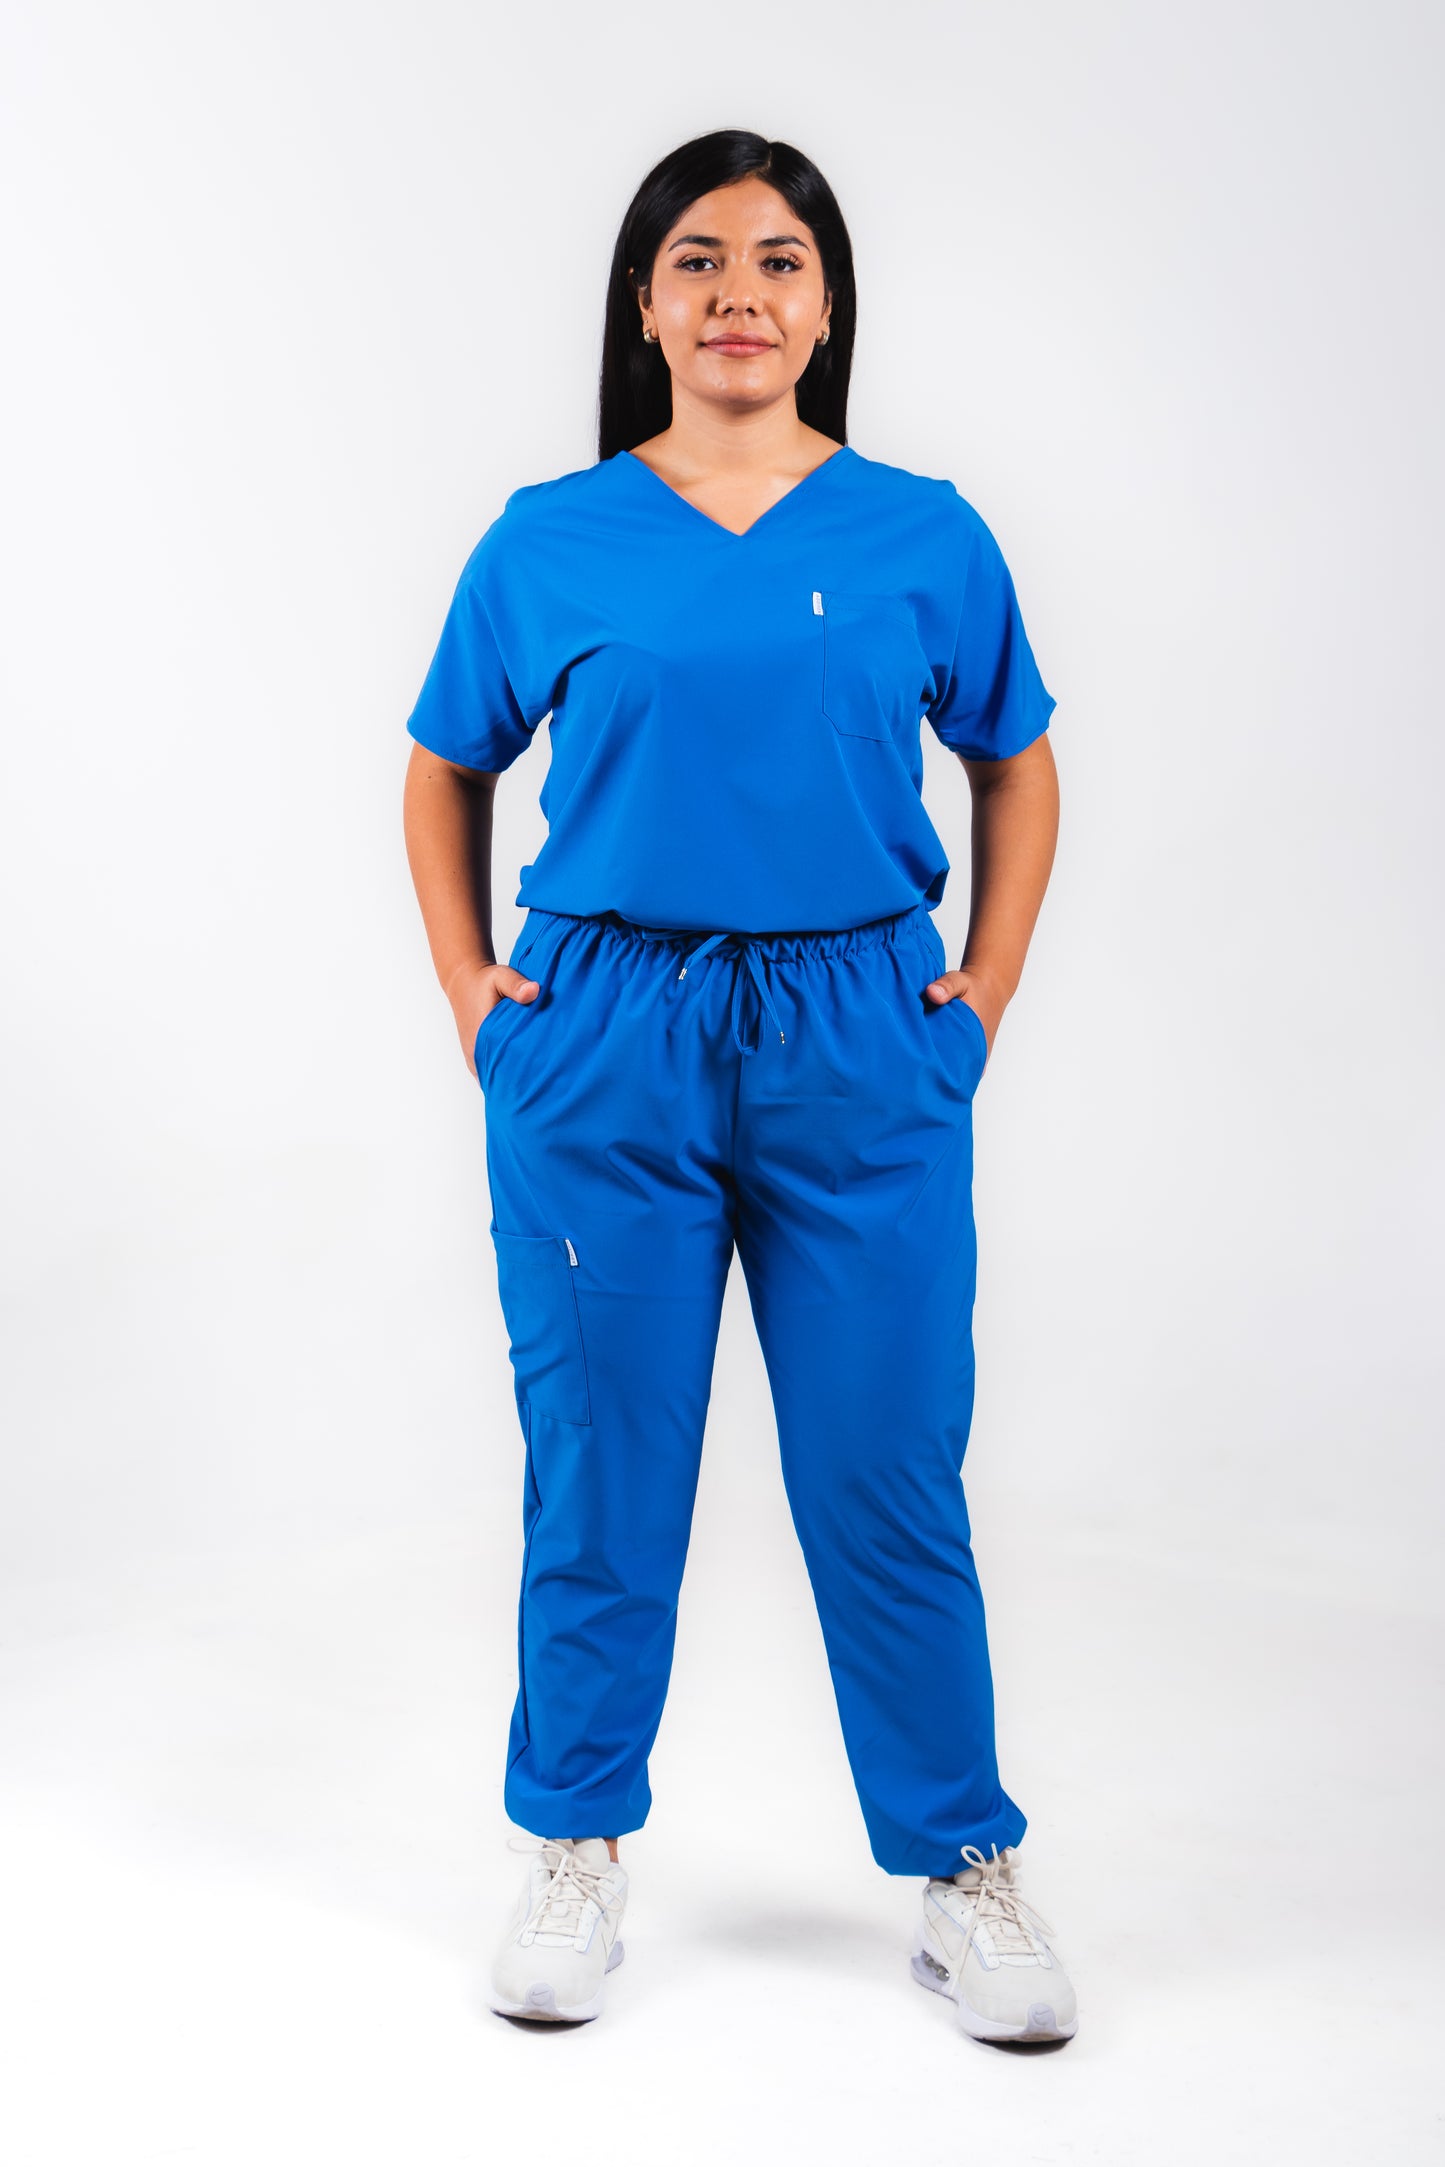 Uniforme quirúrgico para dama color azul turquesa corte jogger. modelo jener marca addisonscrubs.